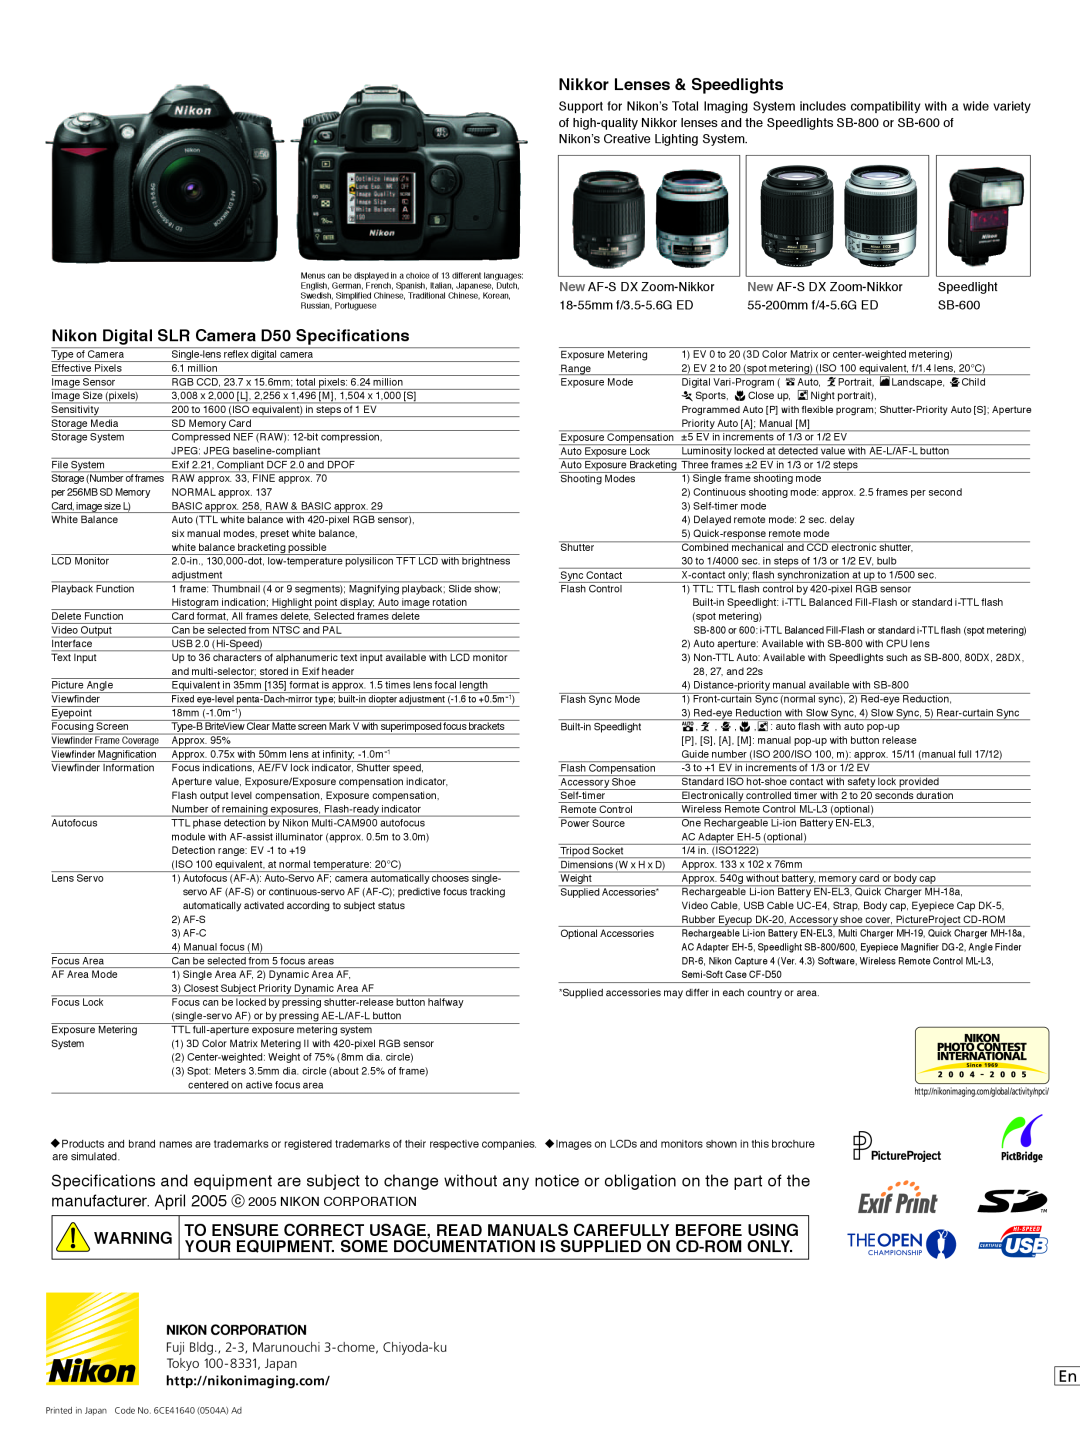 Nikon manual Nikon Digital SLR Camera D50 Specifications, http//nikonimaging.com 